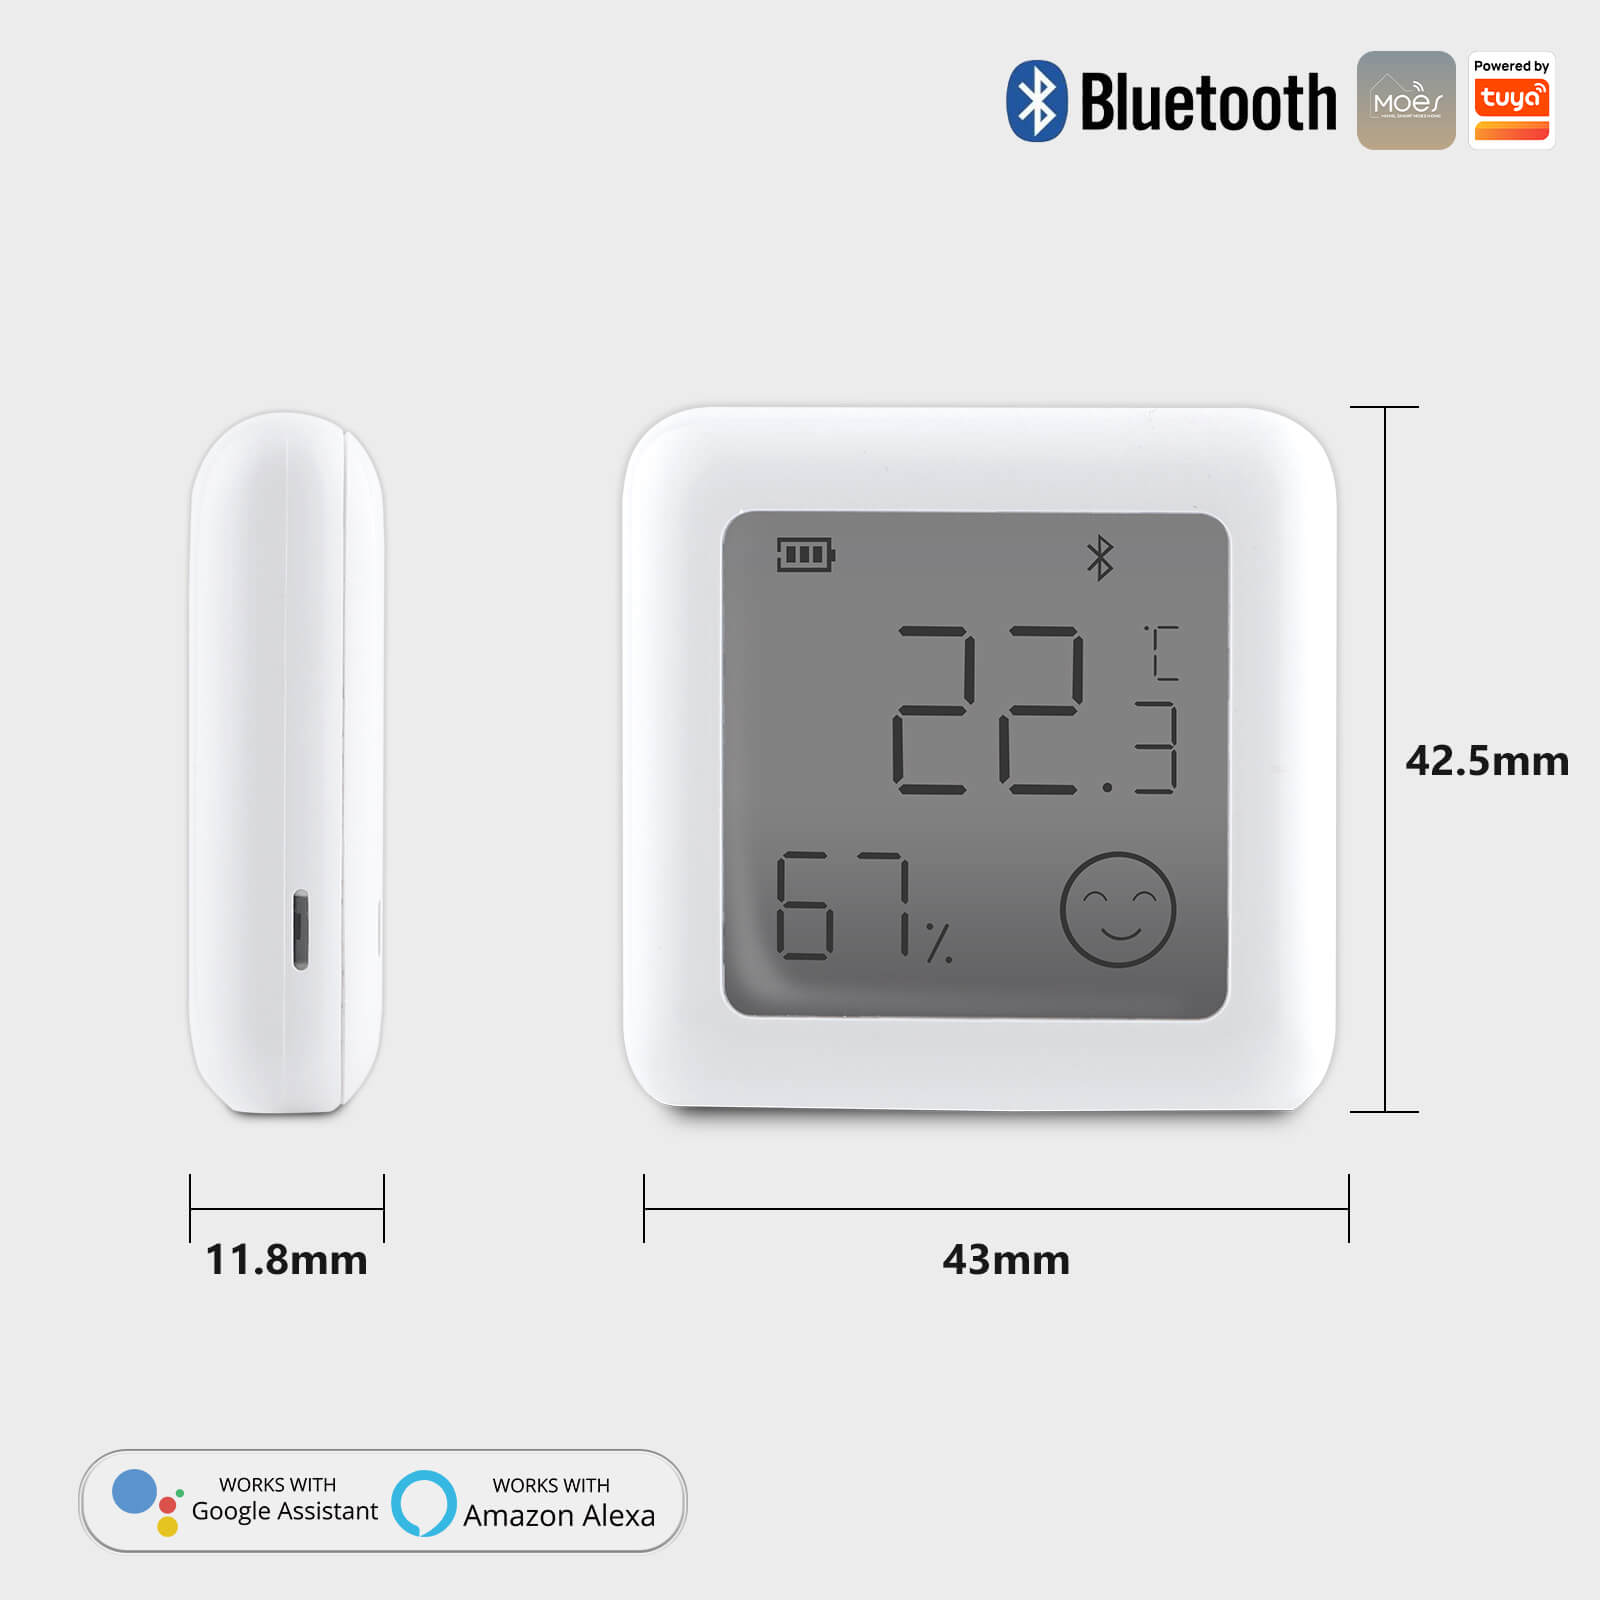 Hygrometer Mini Wireless Thermometer Bluetooth Humidity Meter